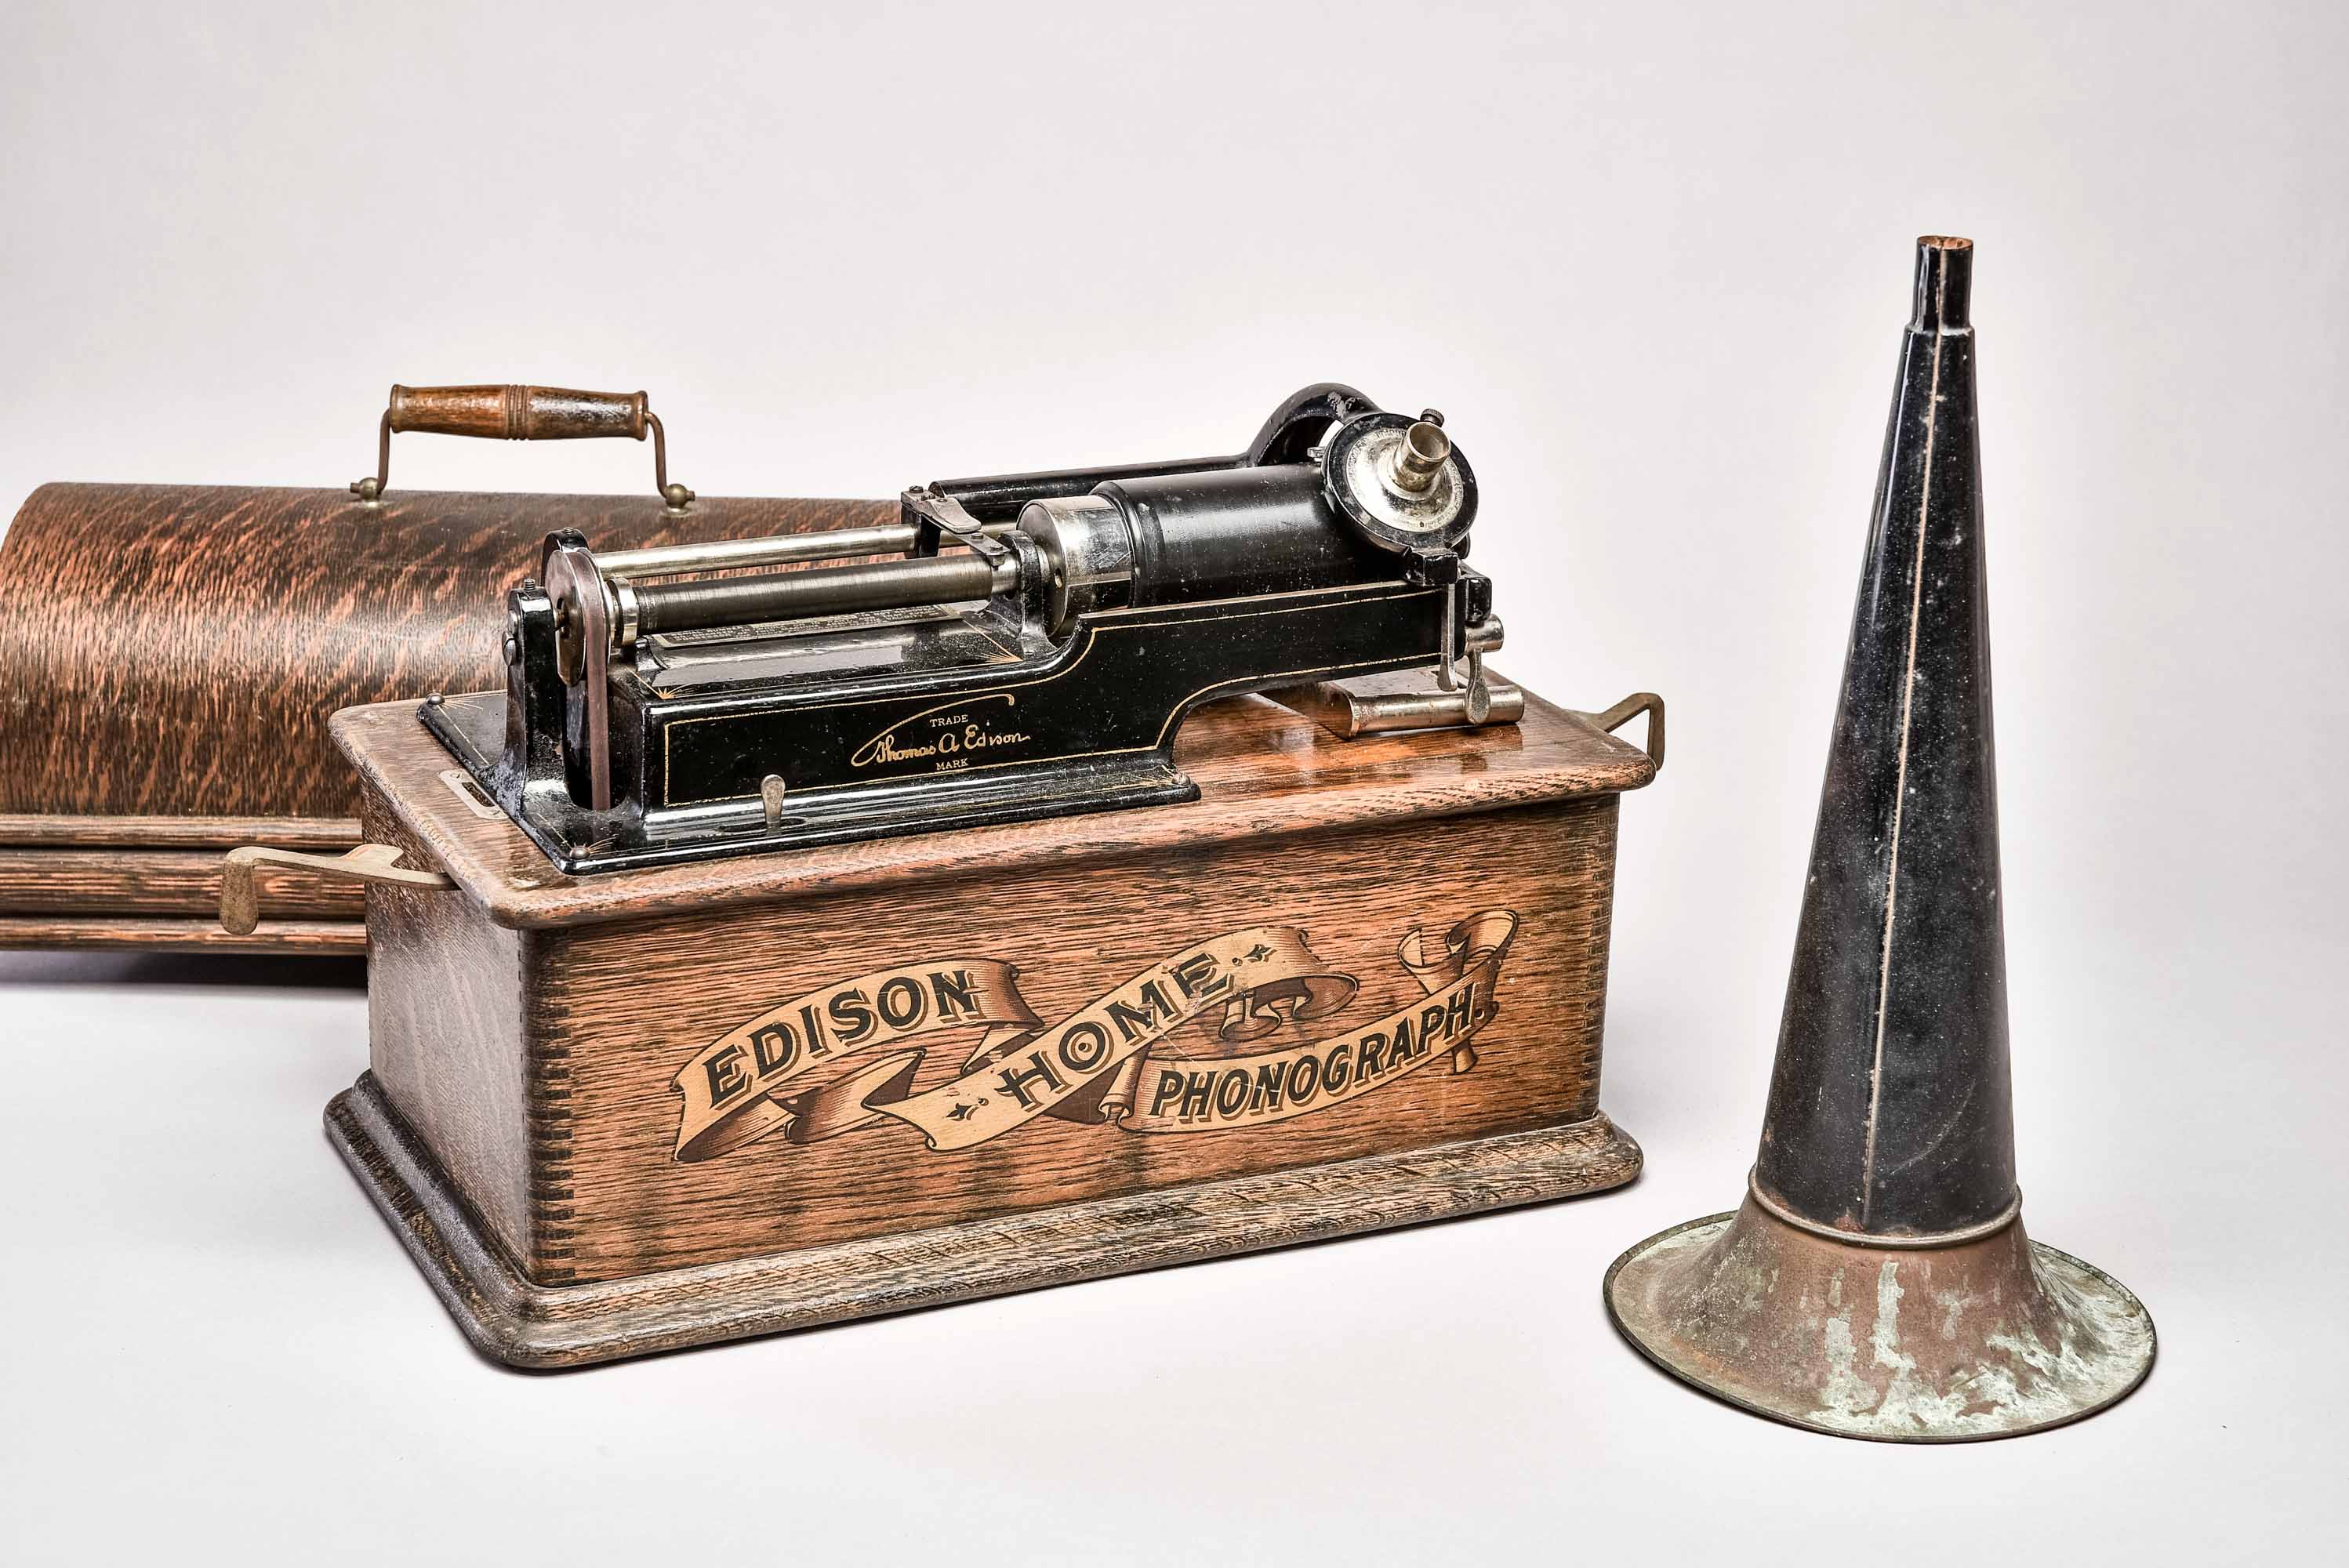 Original Edison phonograph, USA around 1900, cylinder phonograph, model "Standard", with original f - Image 2 of 9